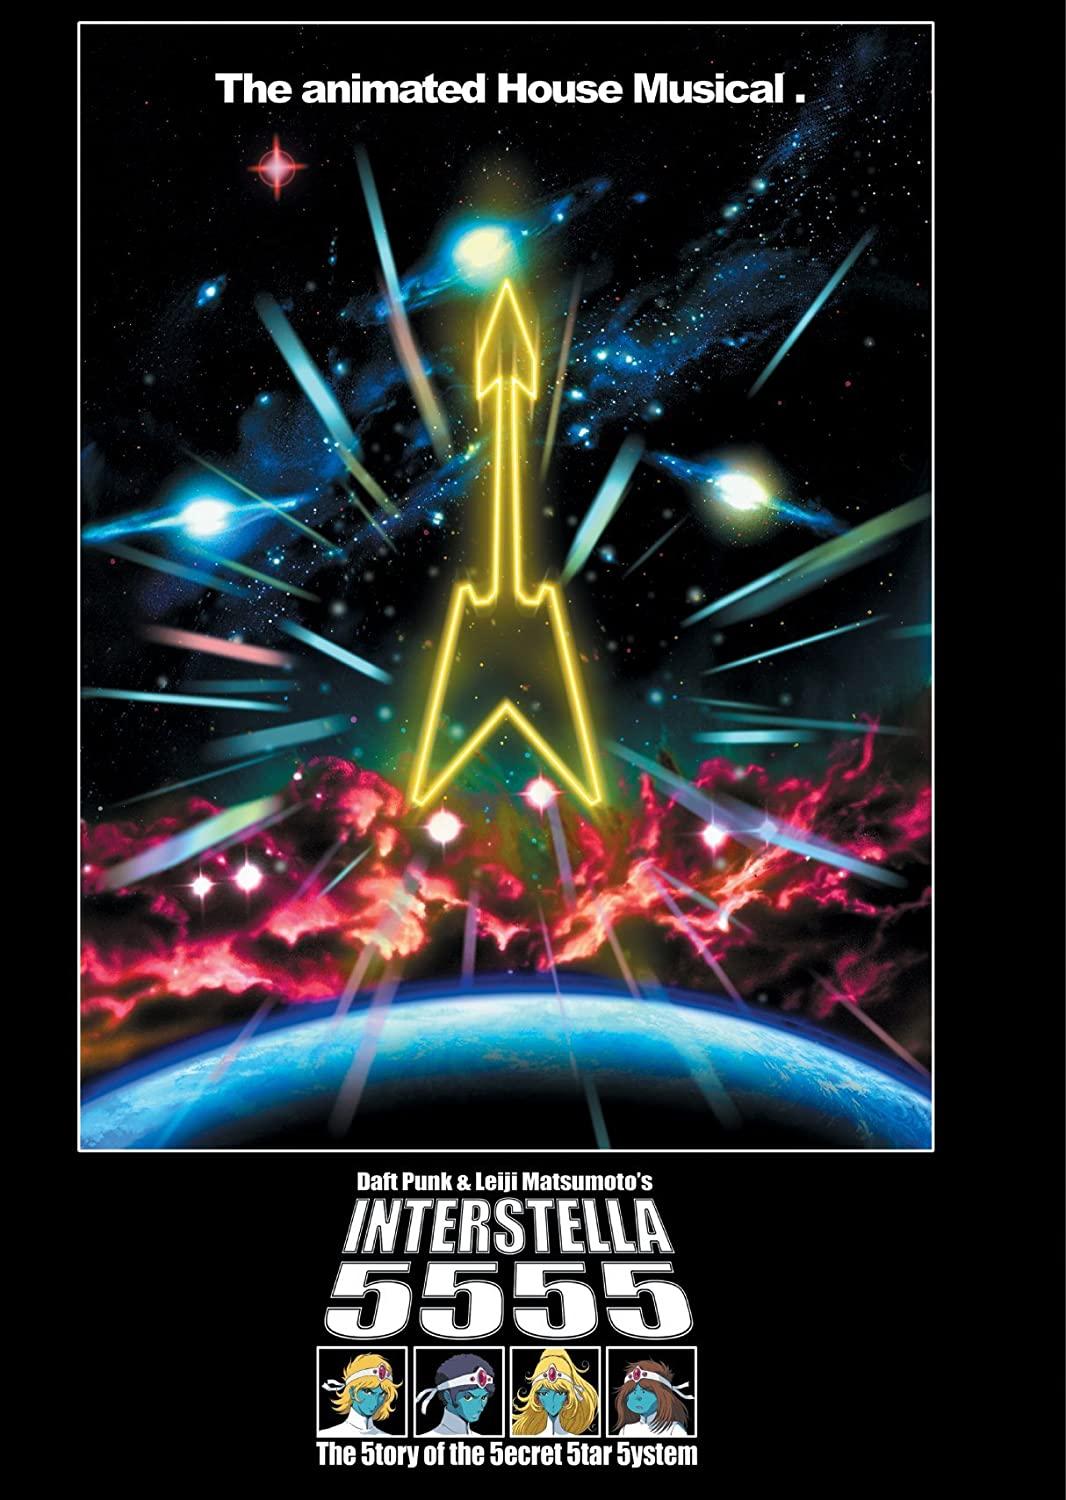 Visuel du film "Interstella 5555". [Daft Life Ltd. Co. et Tōei animation]